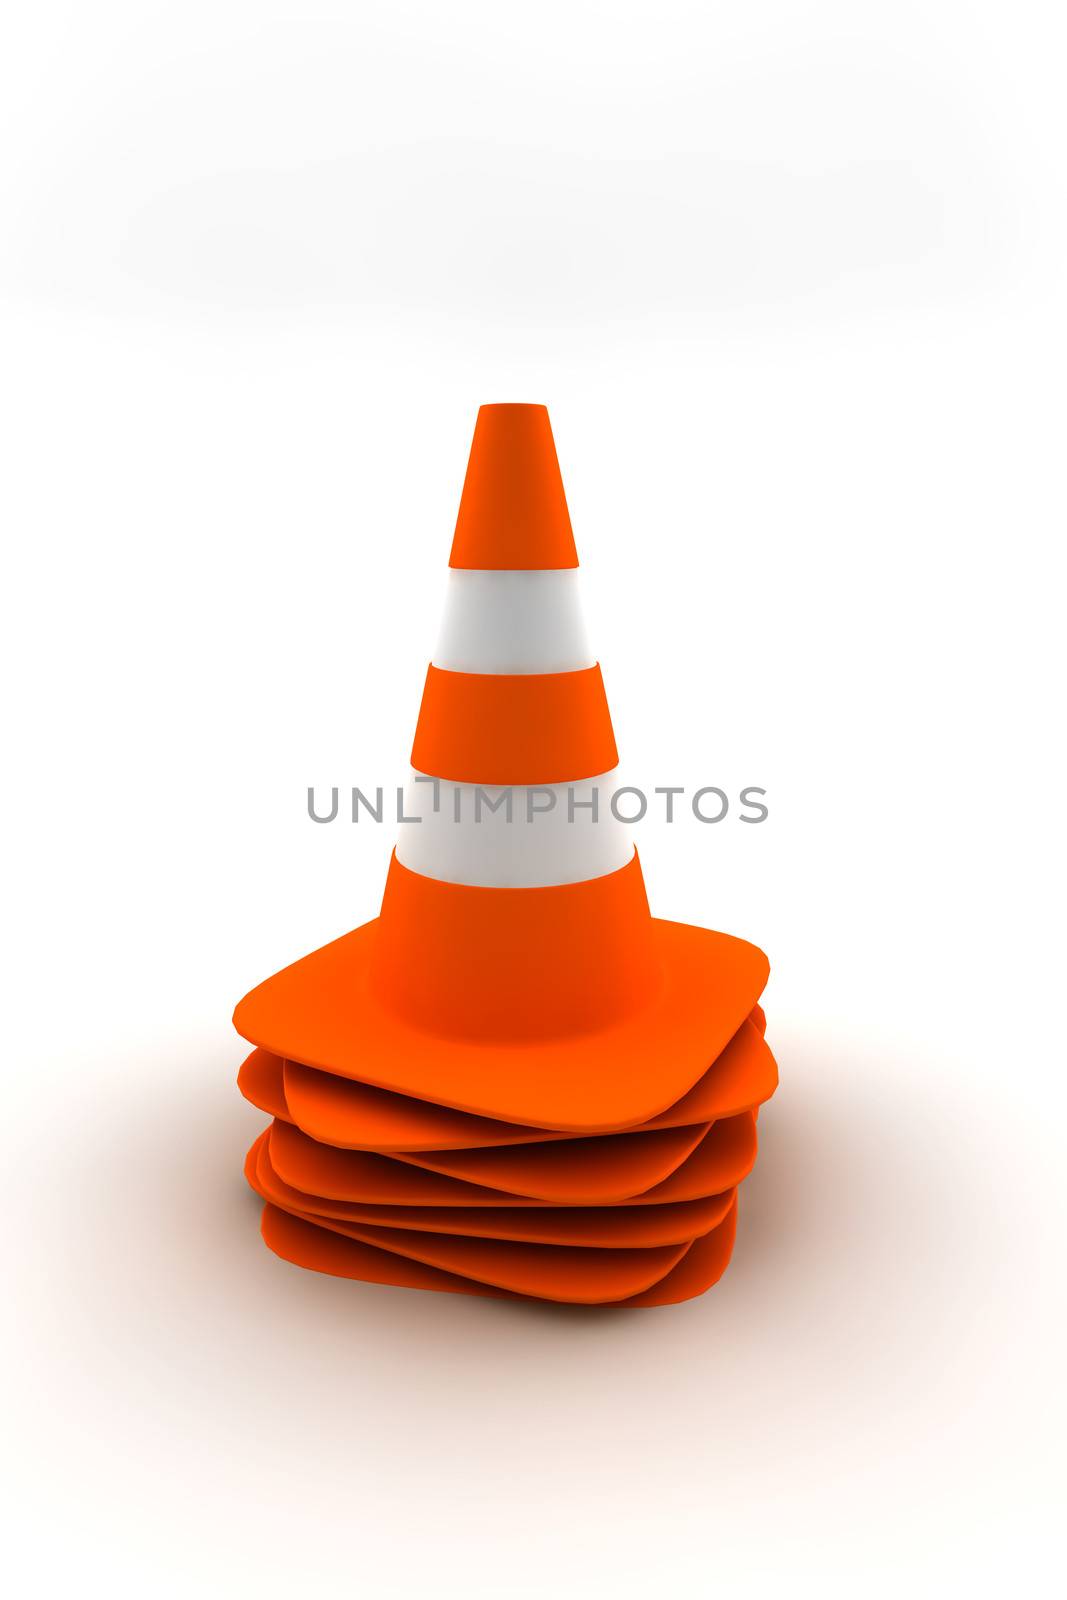 Traffic cones by cla78